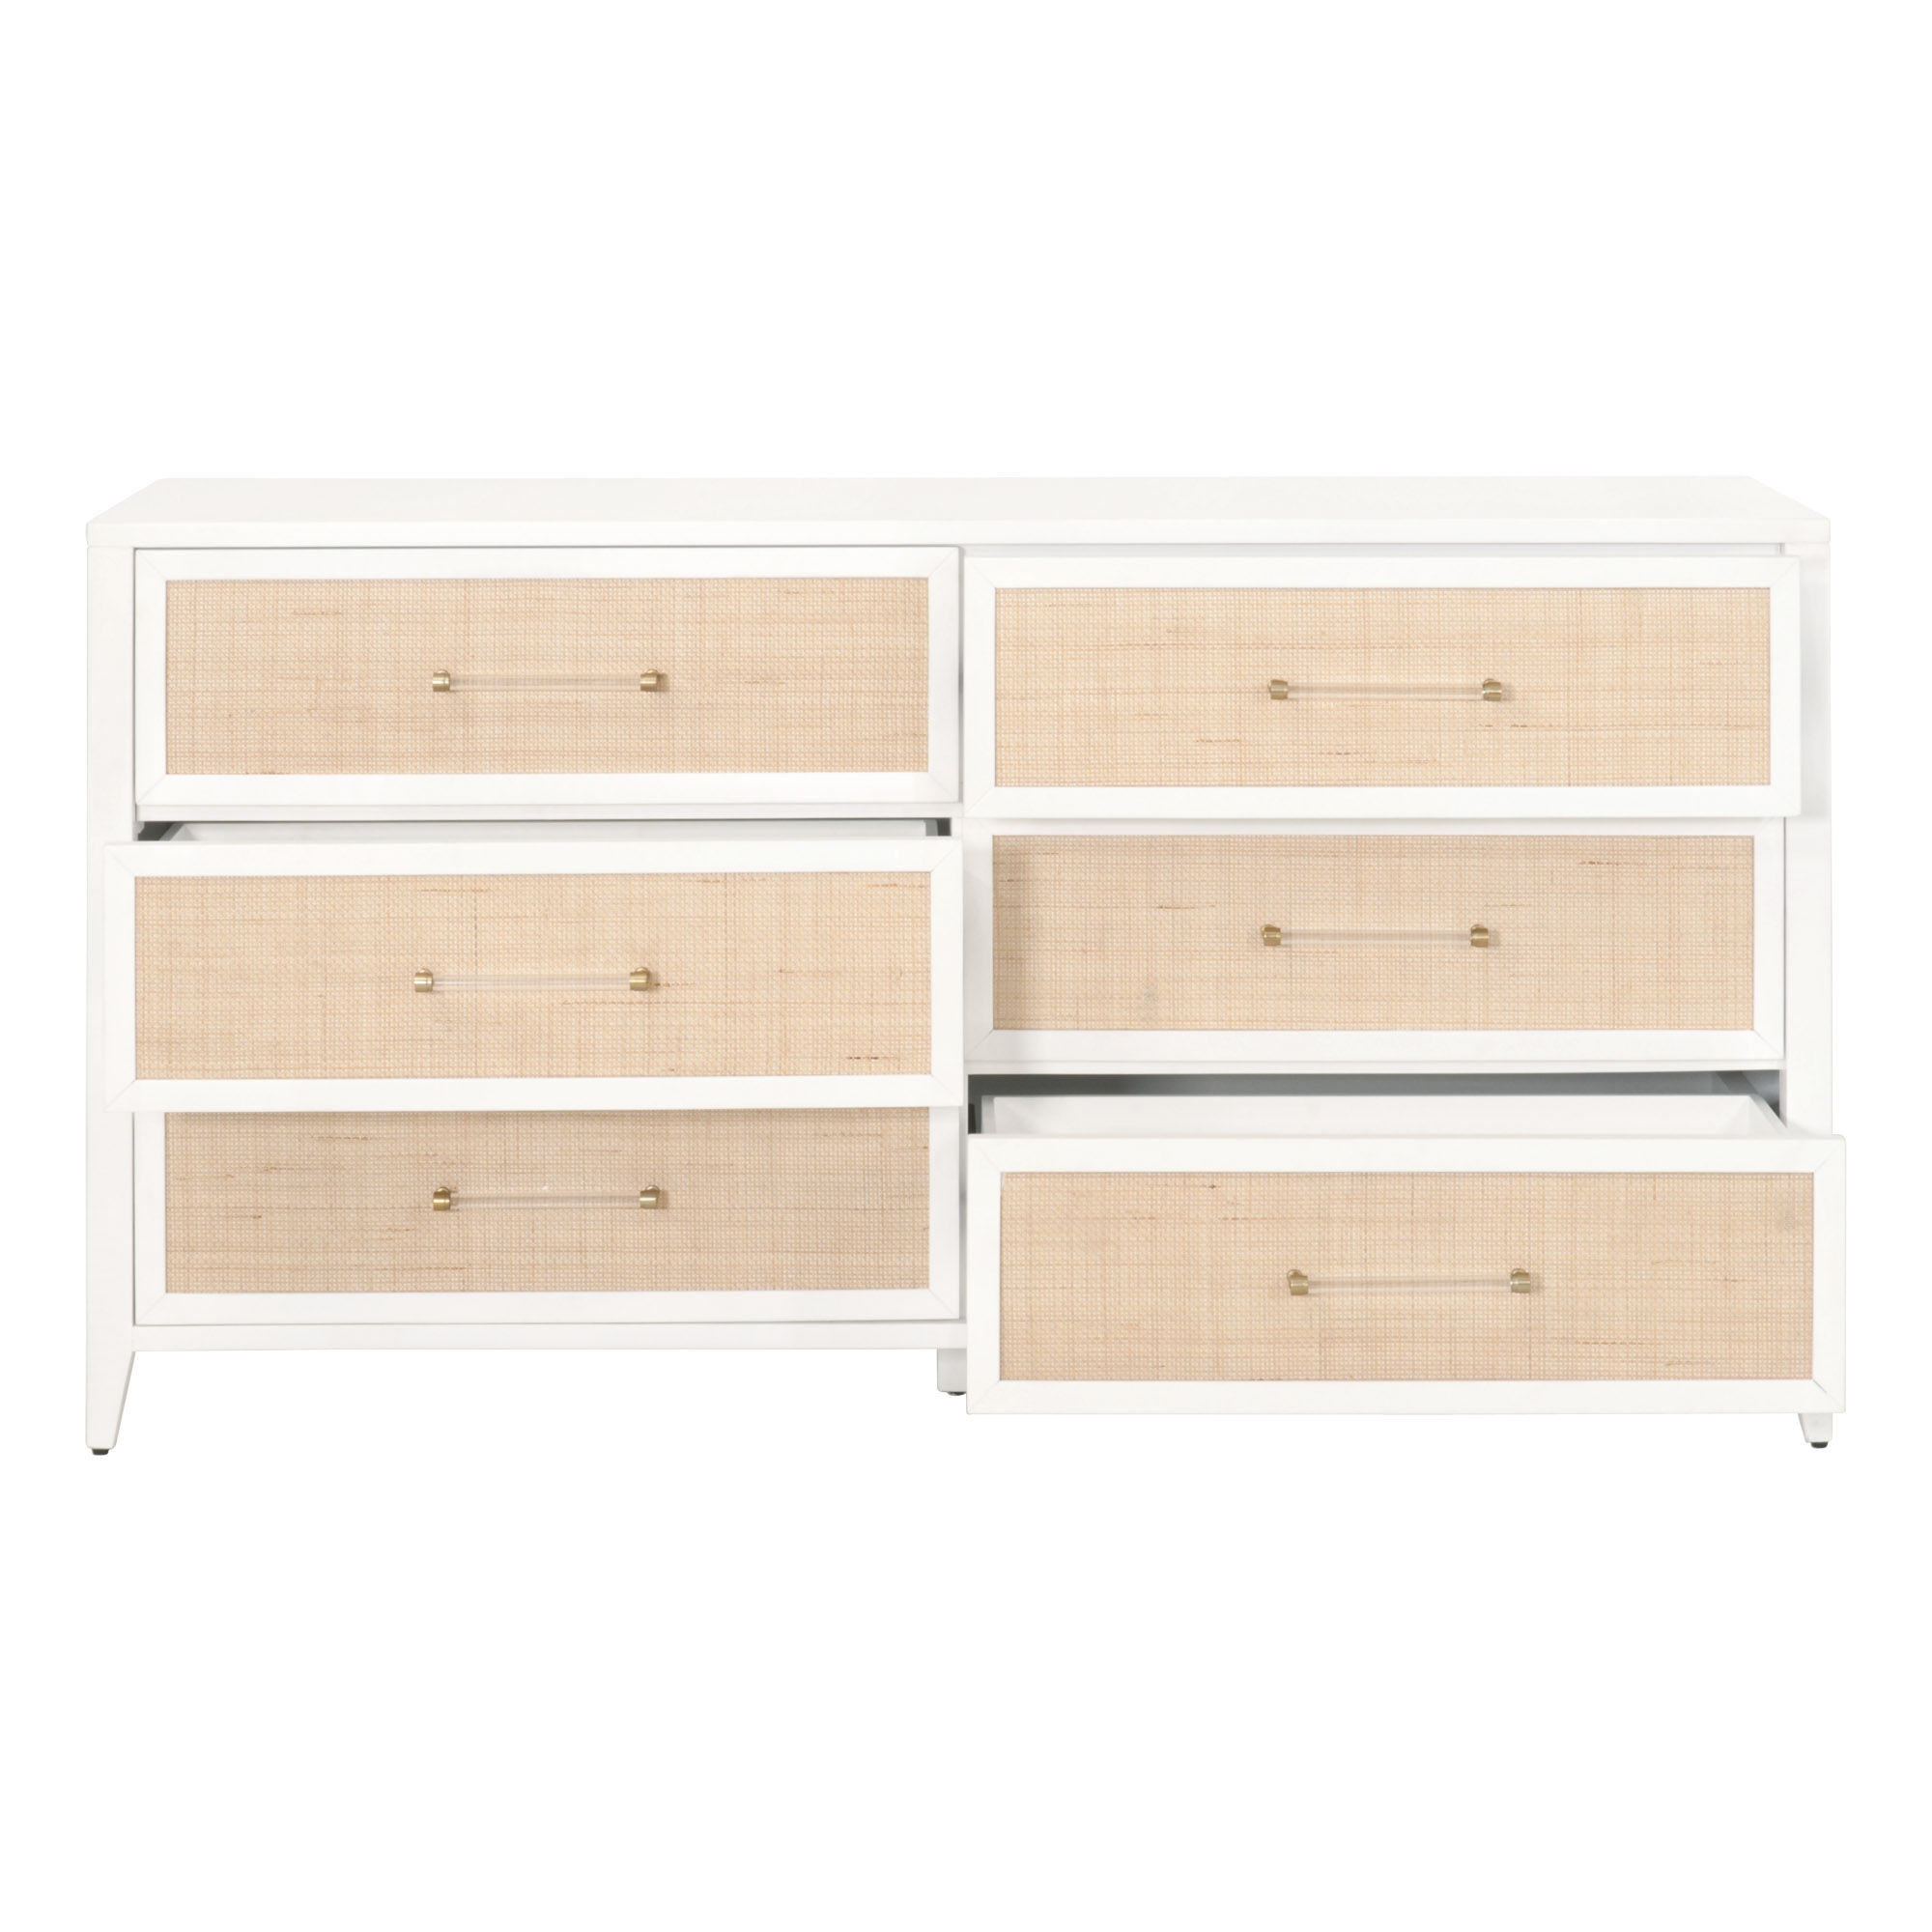 Matira Rattan Double Dresser, White - Image 2